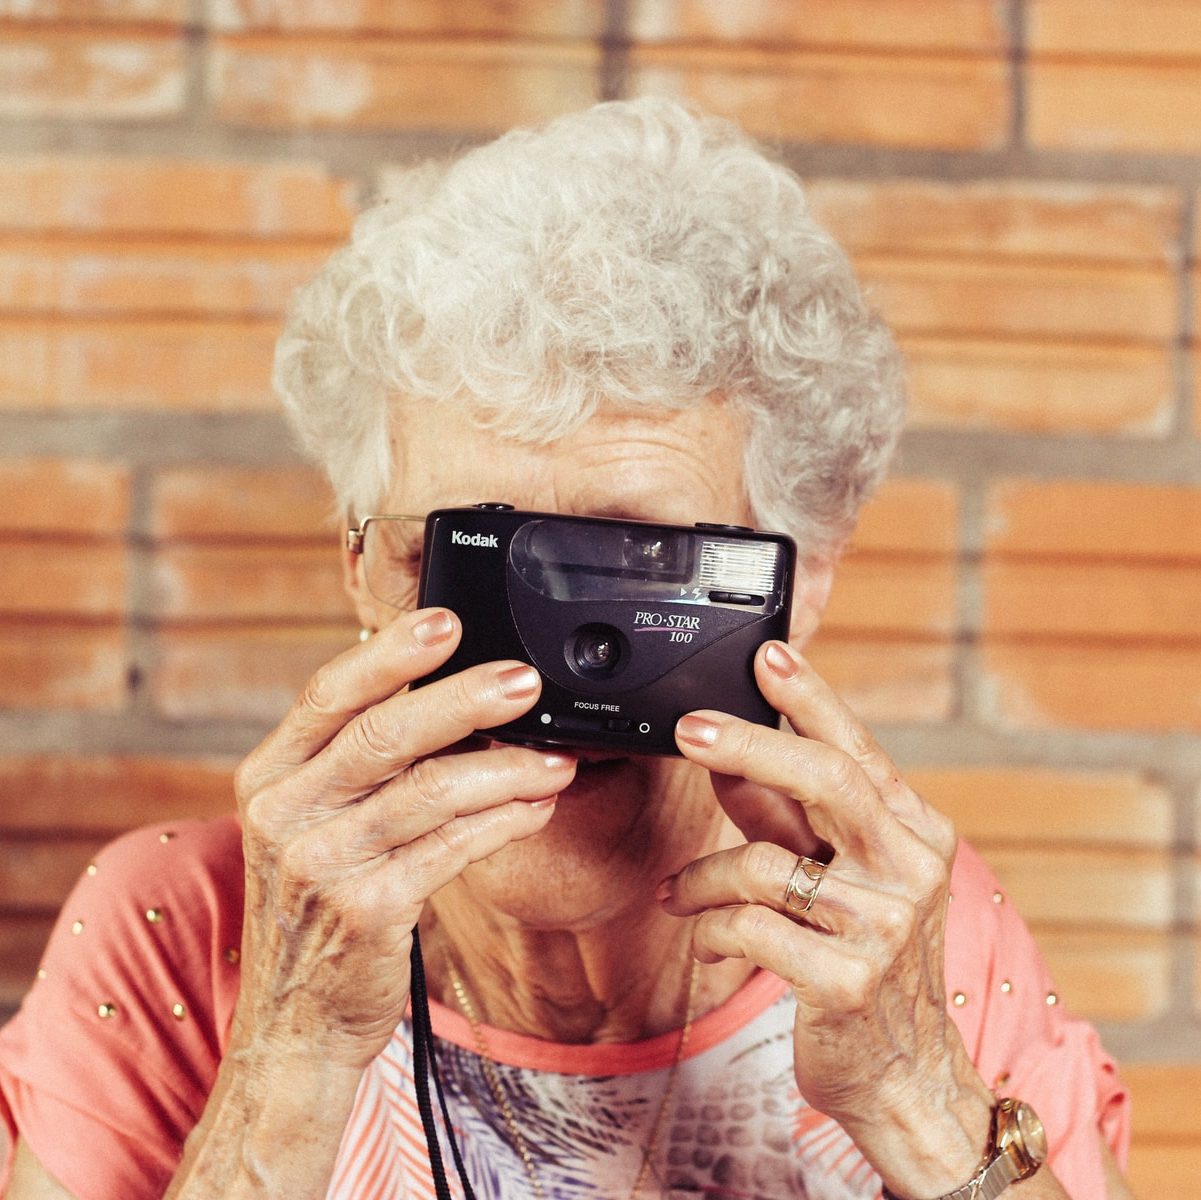 woman holding film camera